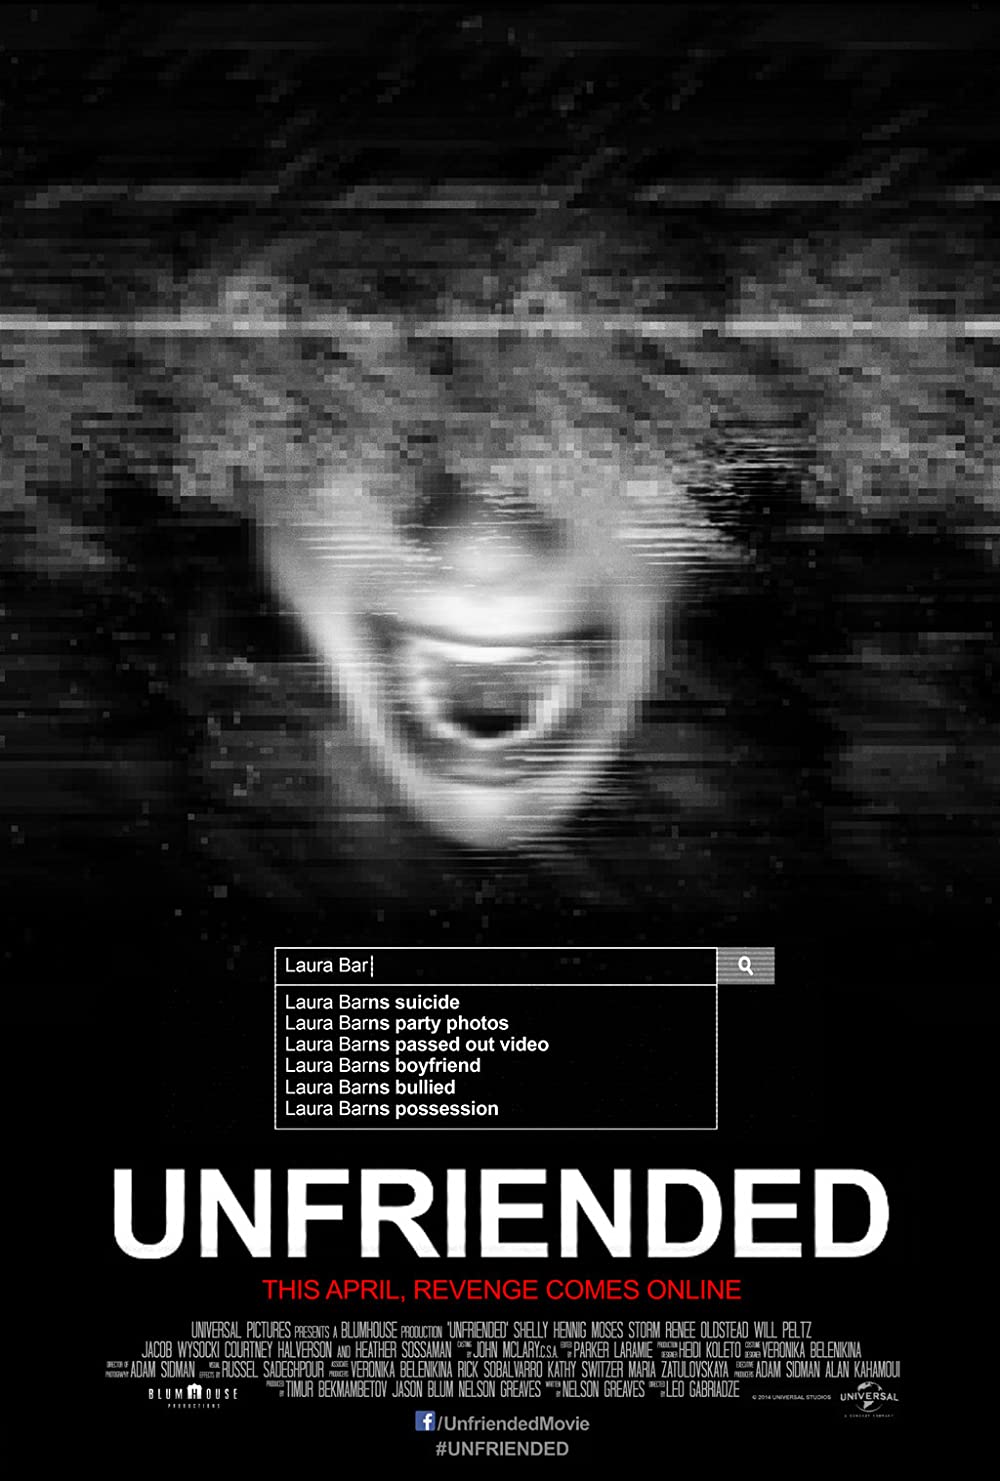 Opening to Unfriended 2015 Theater (Regal) | Scratchpad | Fandom